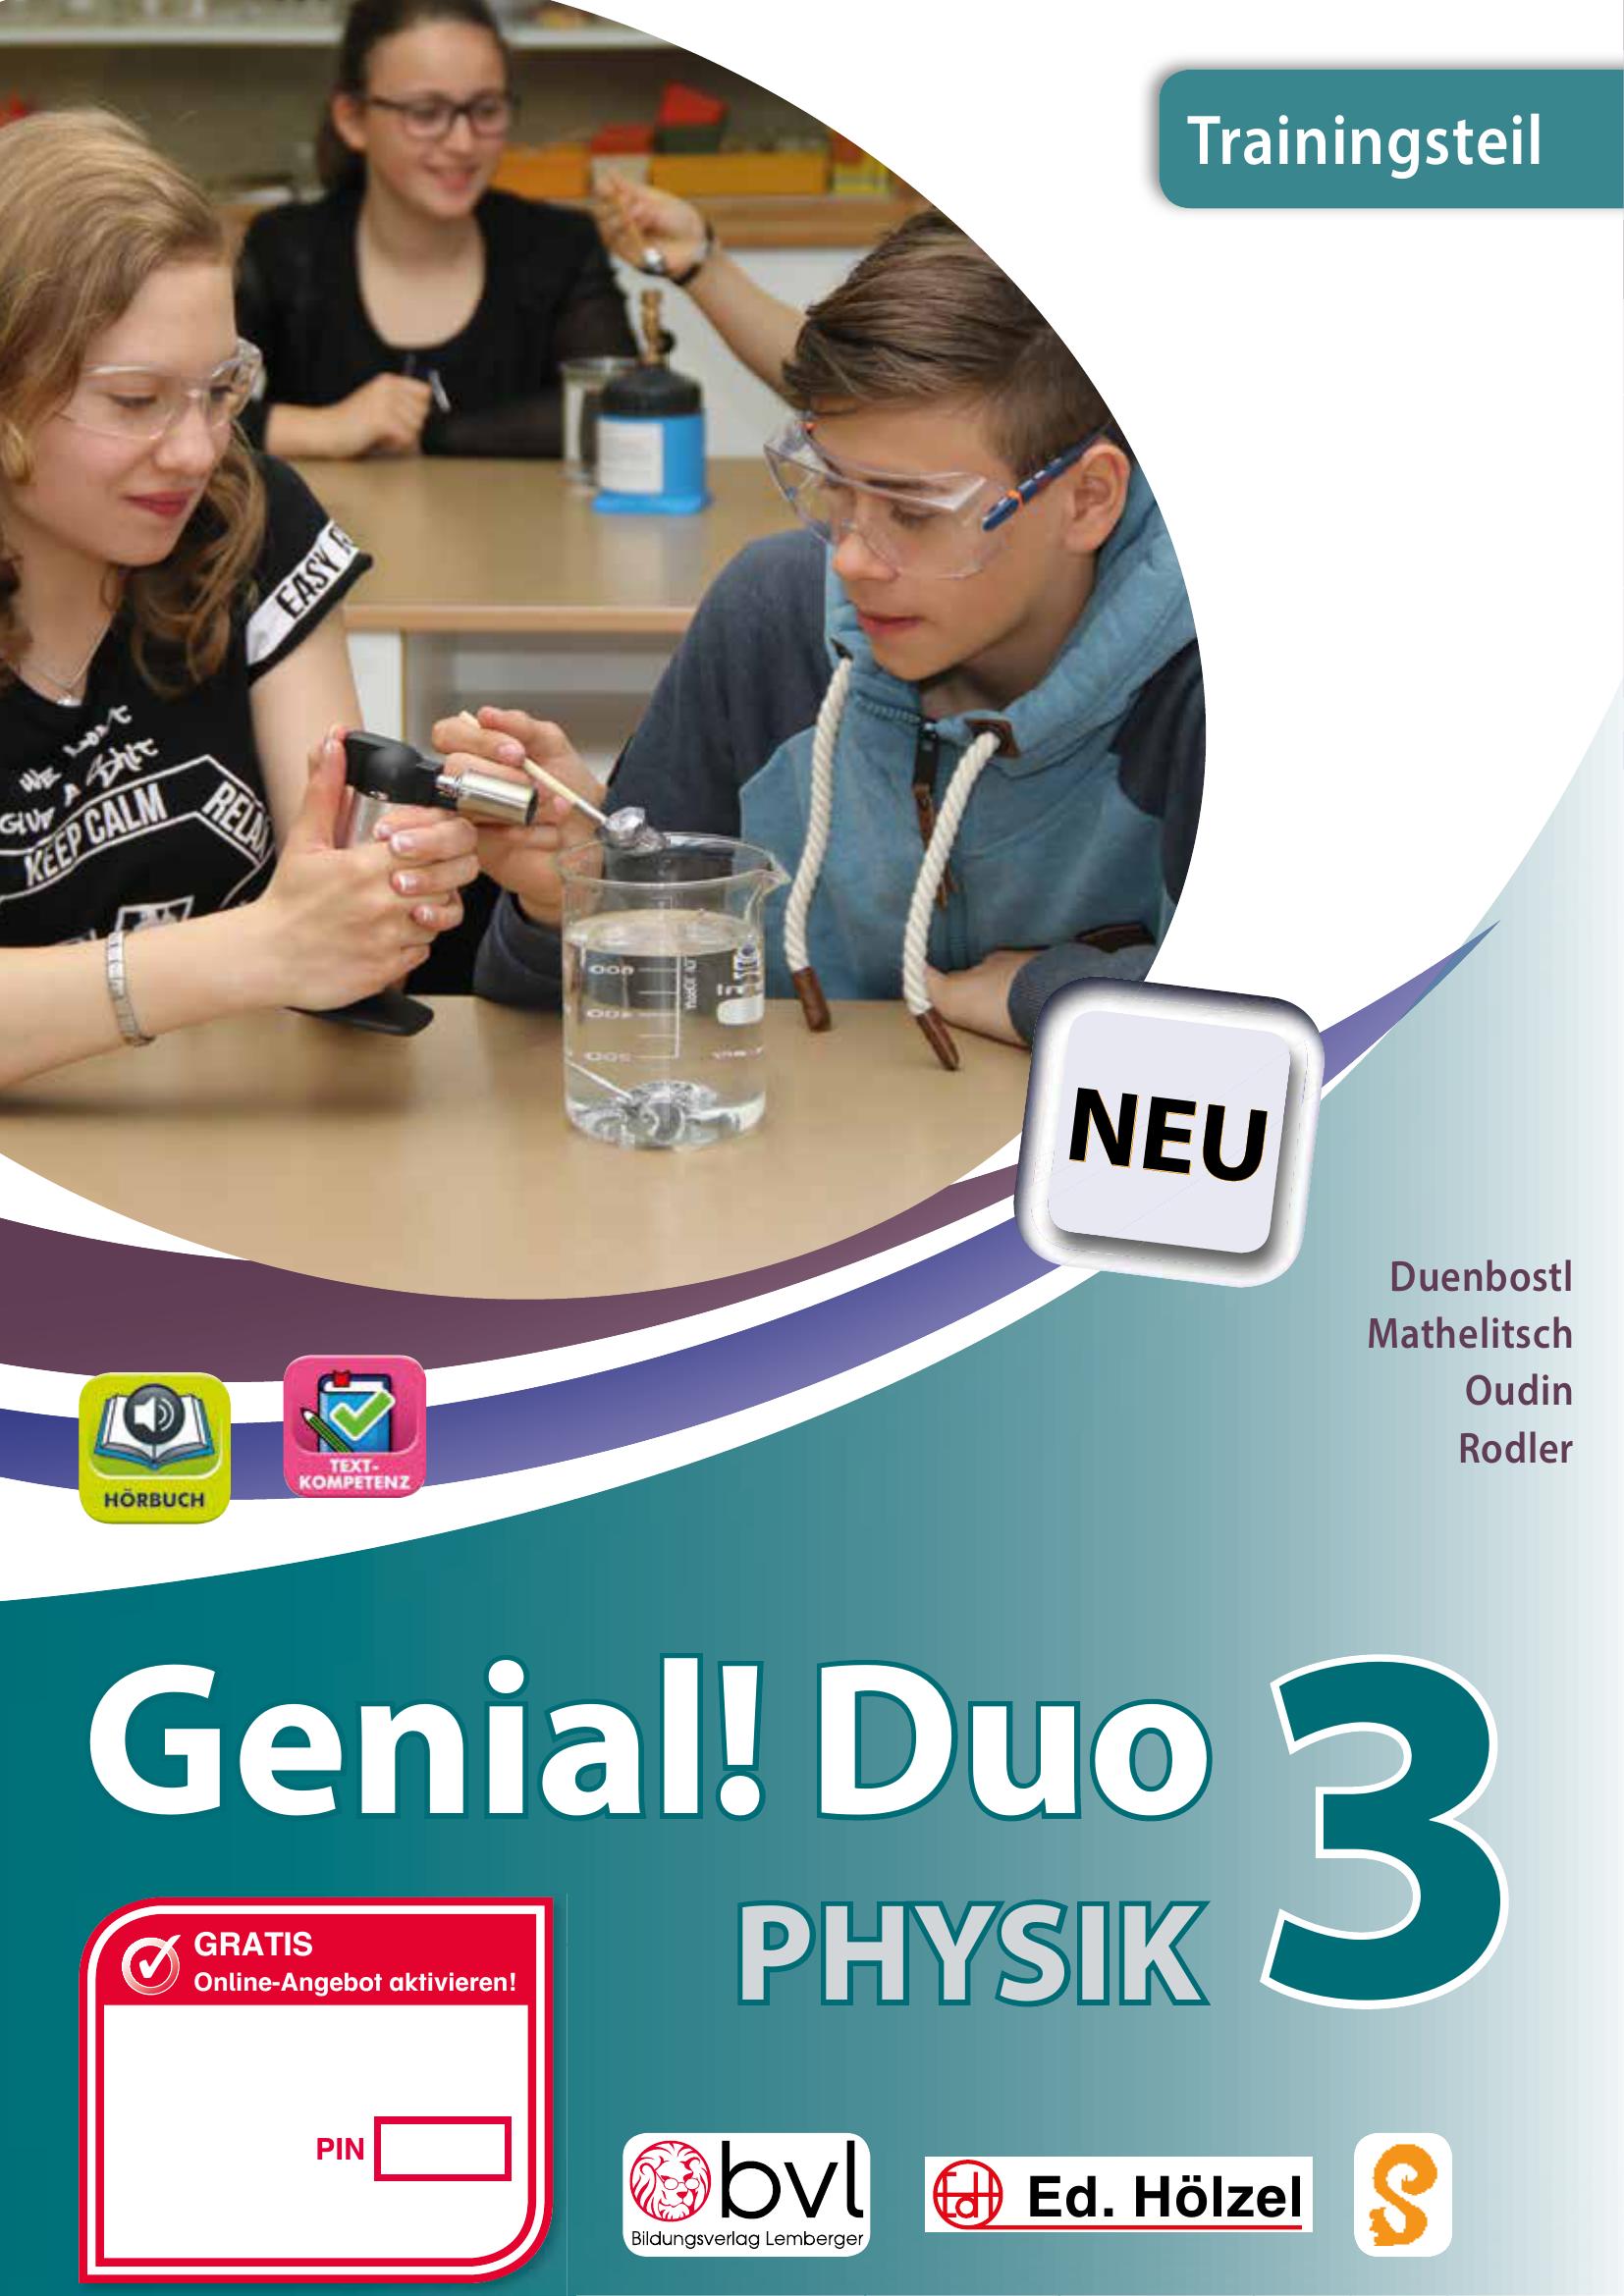 Genial! DUO Physik 3 - Trainings-Teil